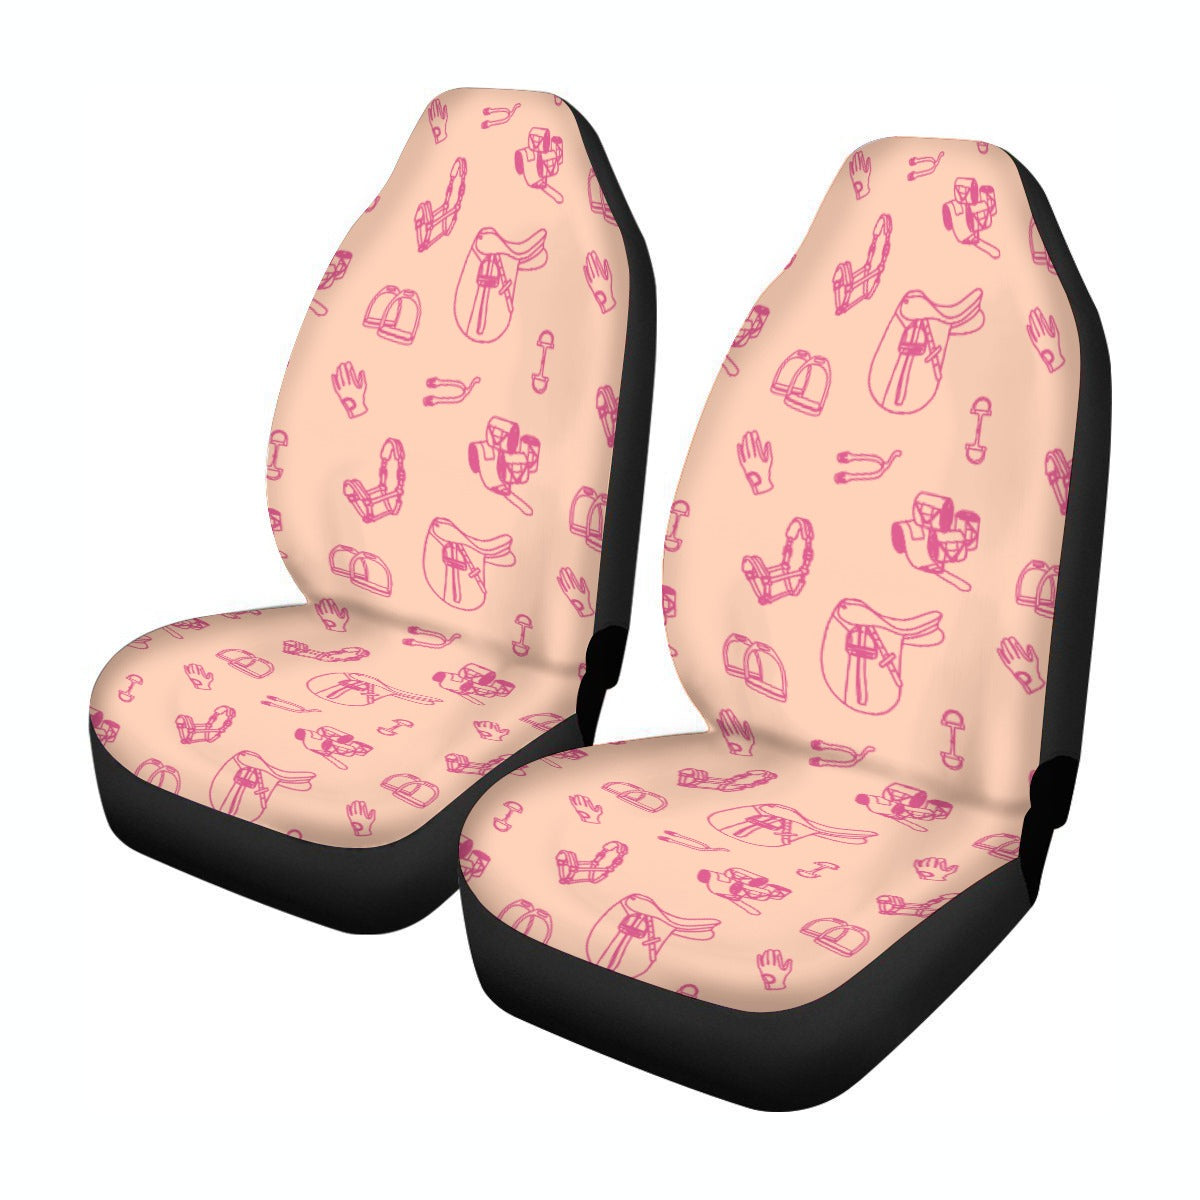 Saddle & Tack - Universal Car Seat Cover - Pink